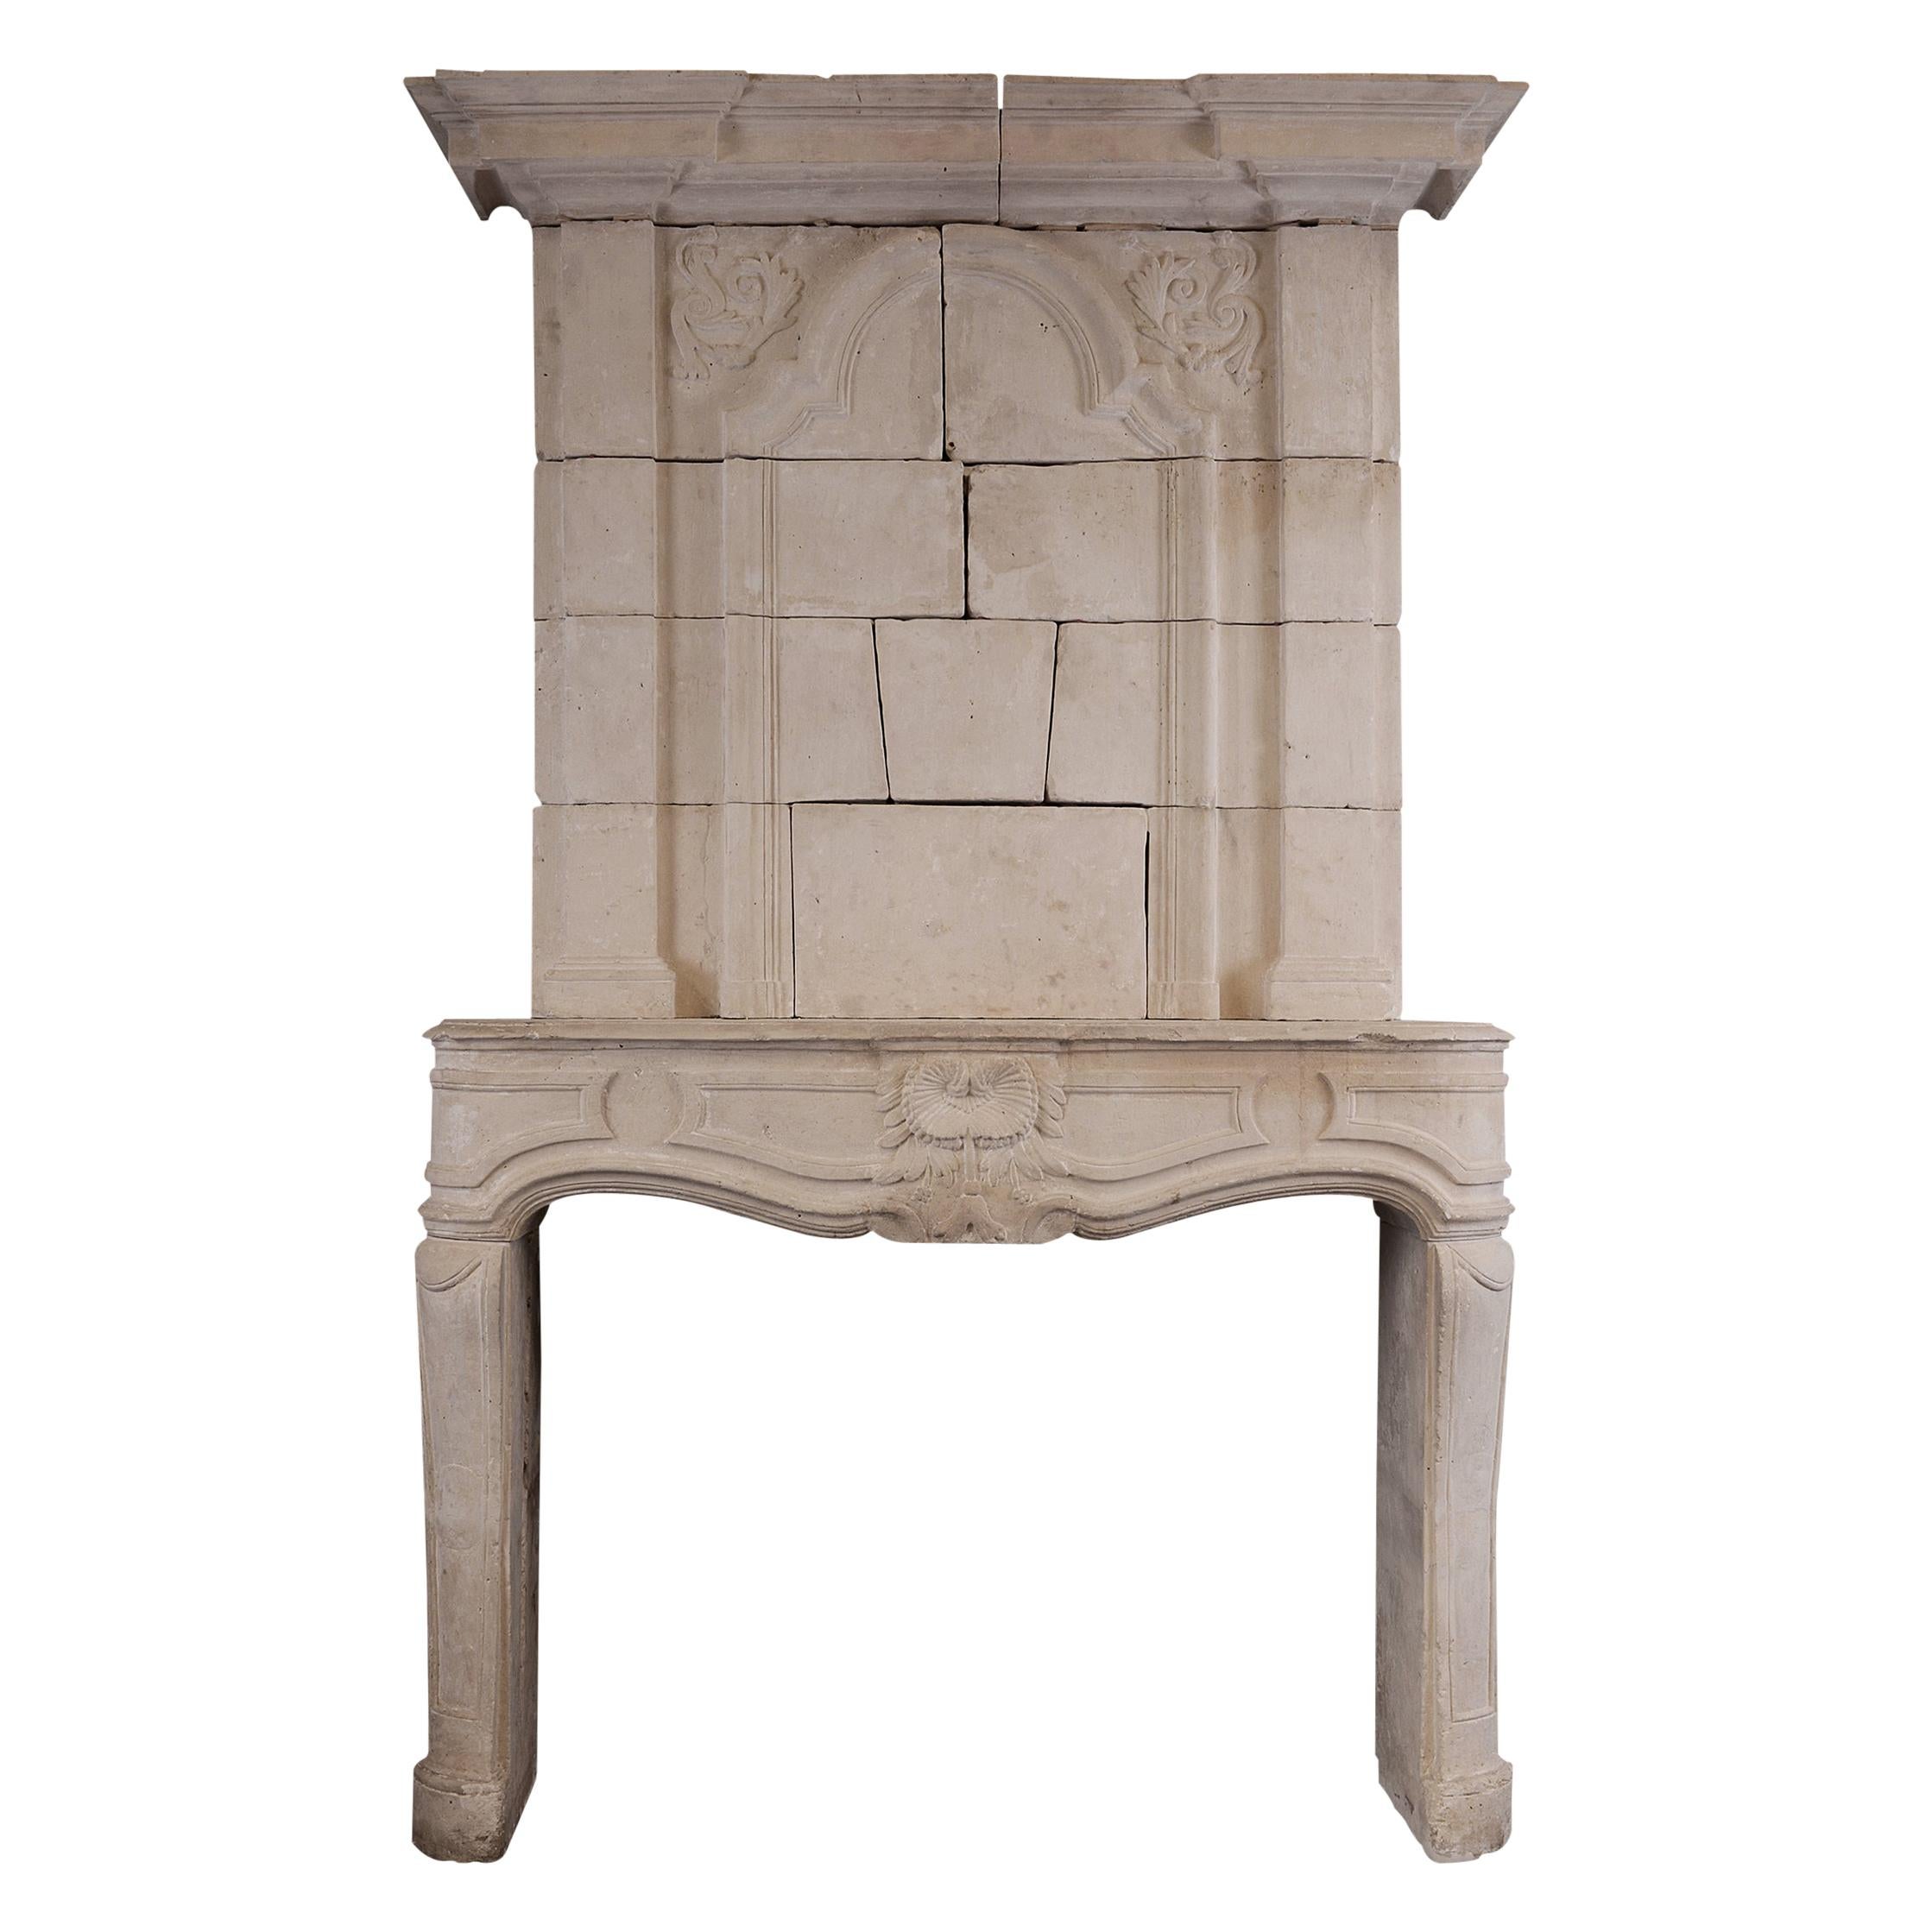 Large & Impressive French Limestone Trumeau Fireplace For Sale